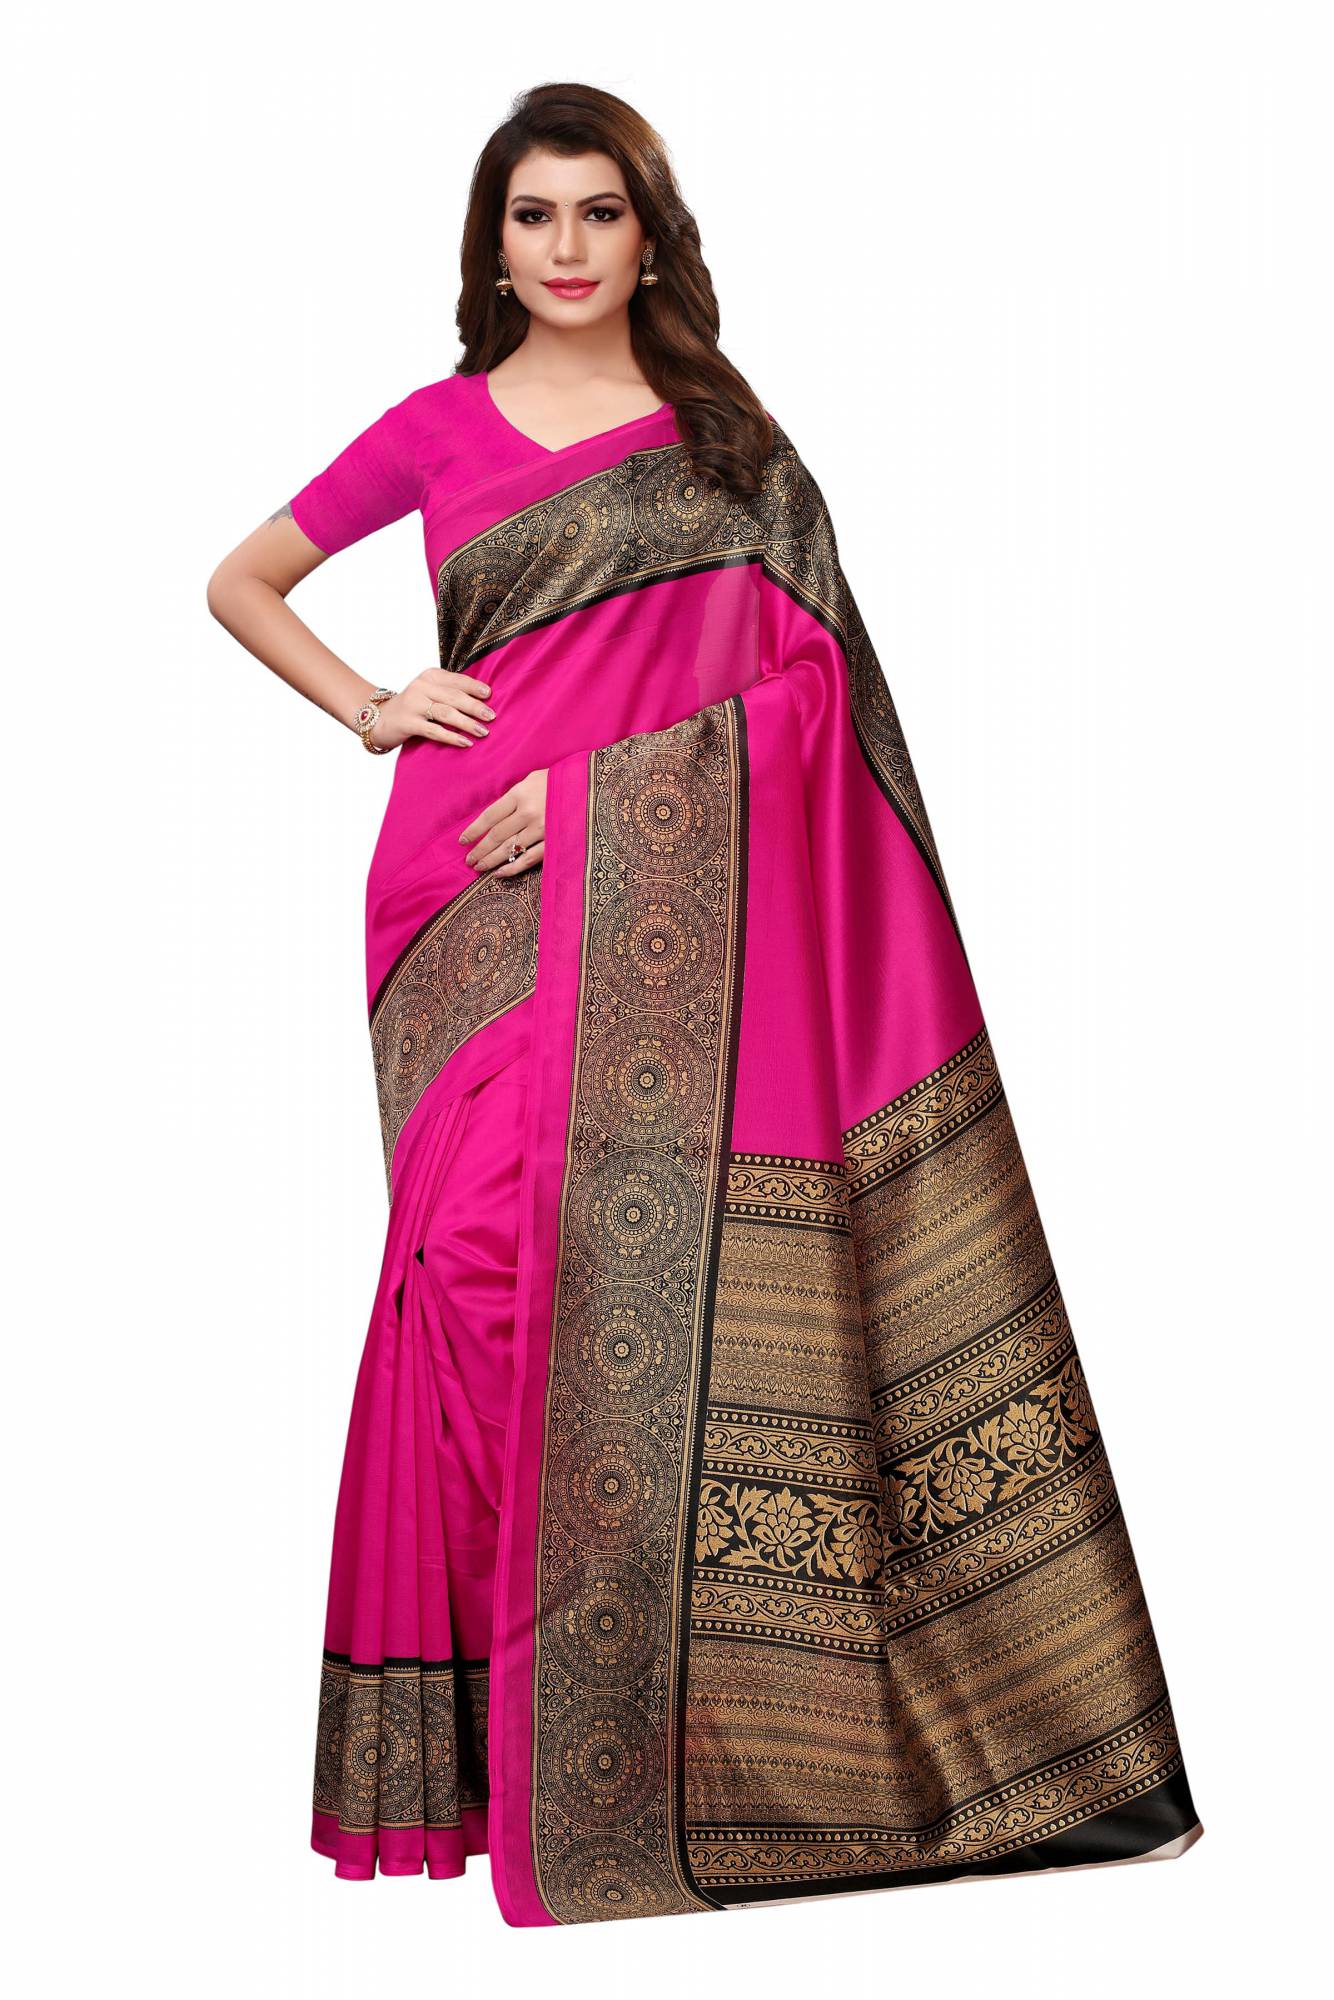 sheetal ladwa on LinkedIn: Buy online Pure Mysore Silk Saree in India